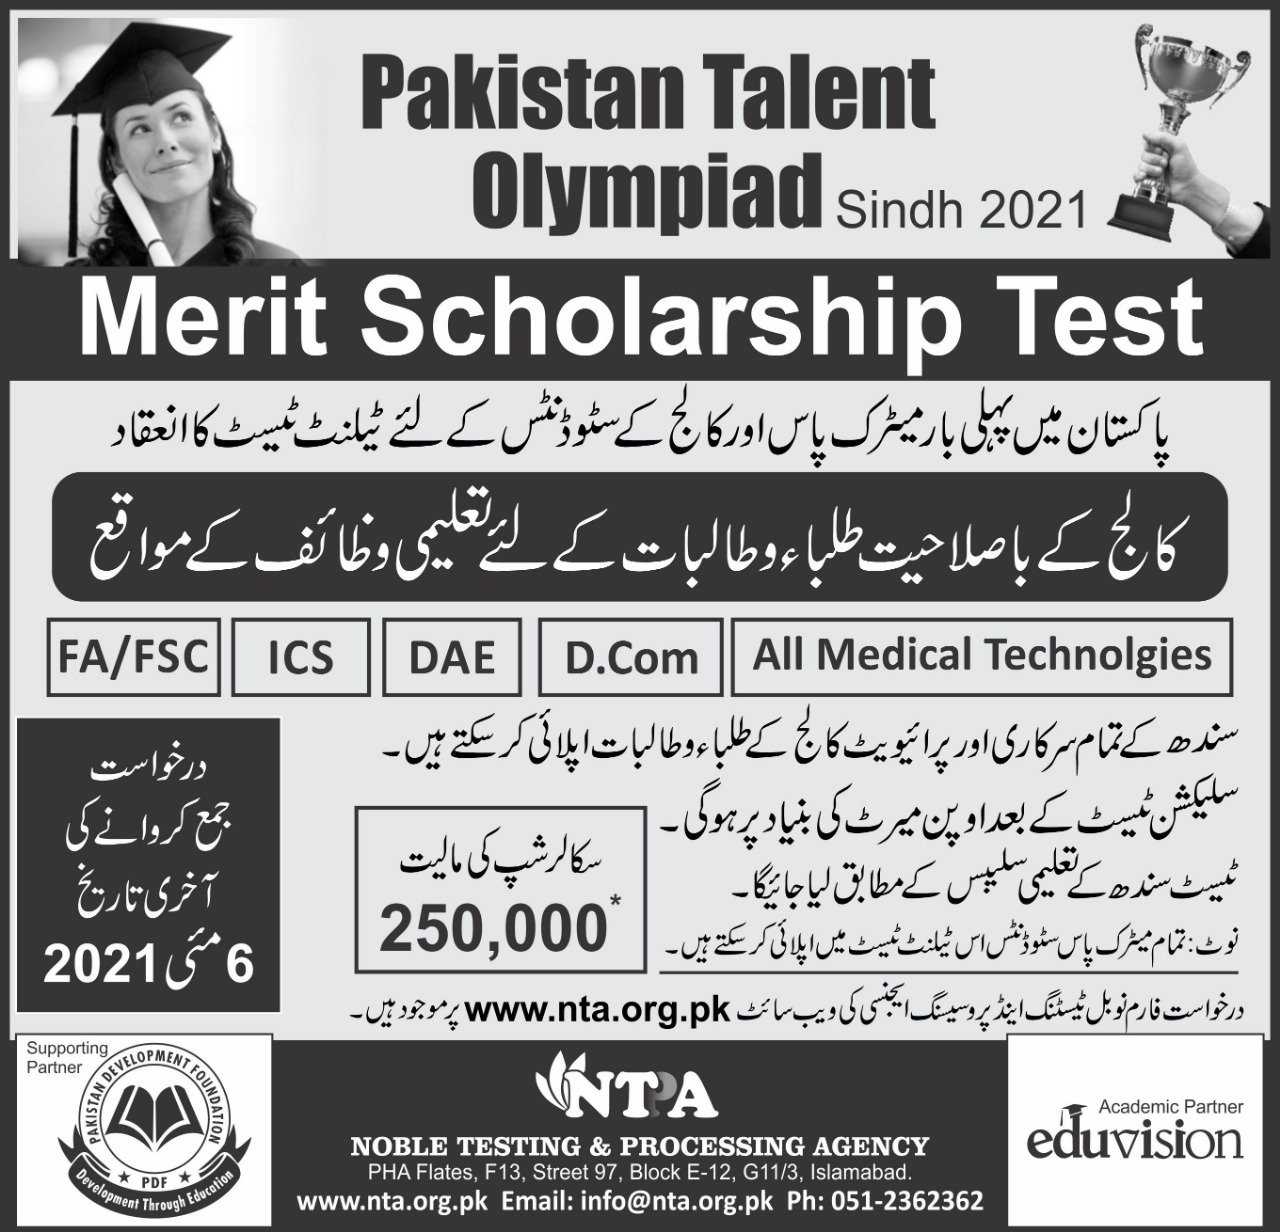 Pakistan Talent Olympiad Sindh Merit Scholarship 2021 NTPA Result